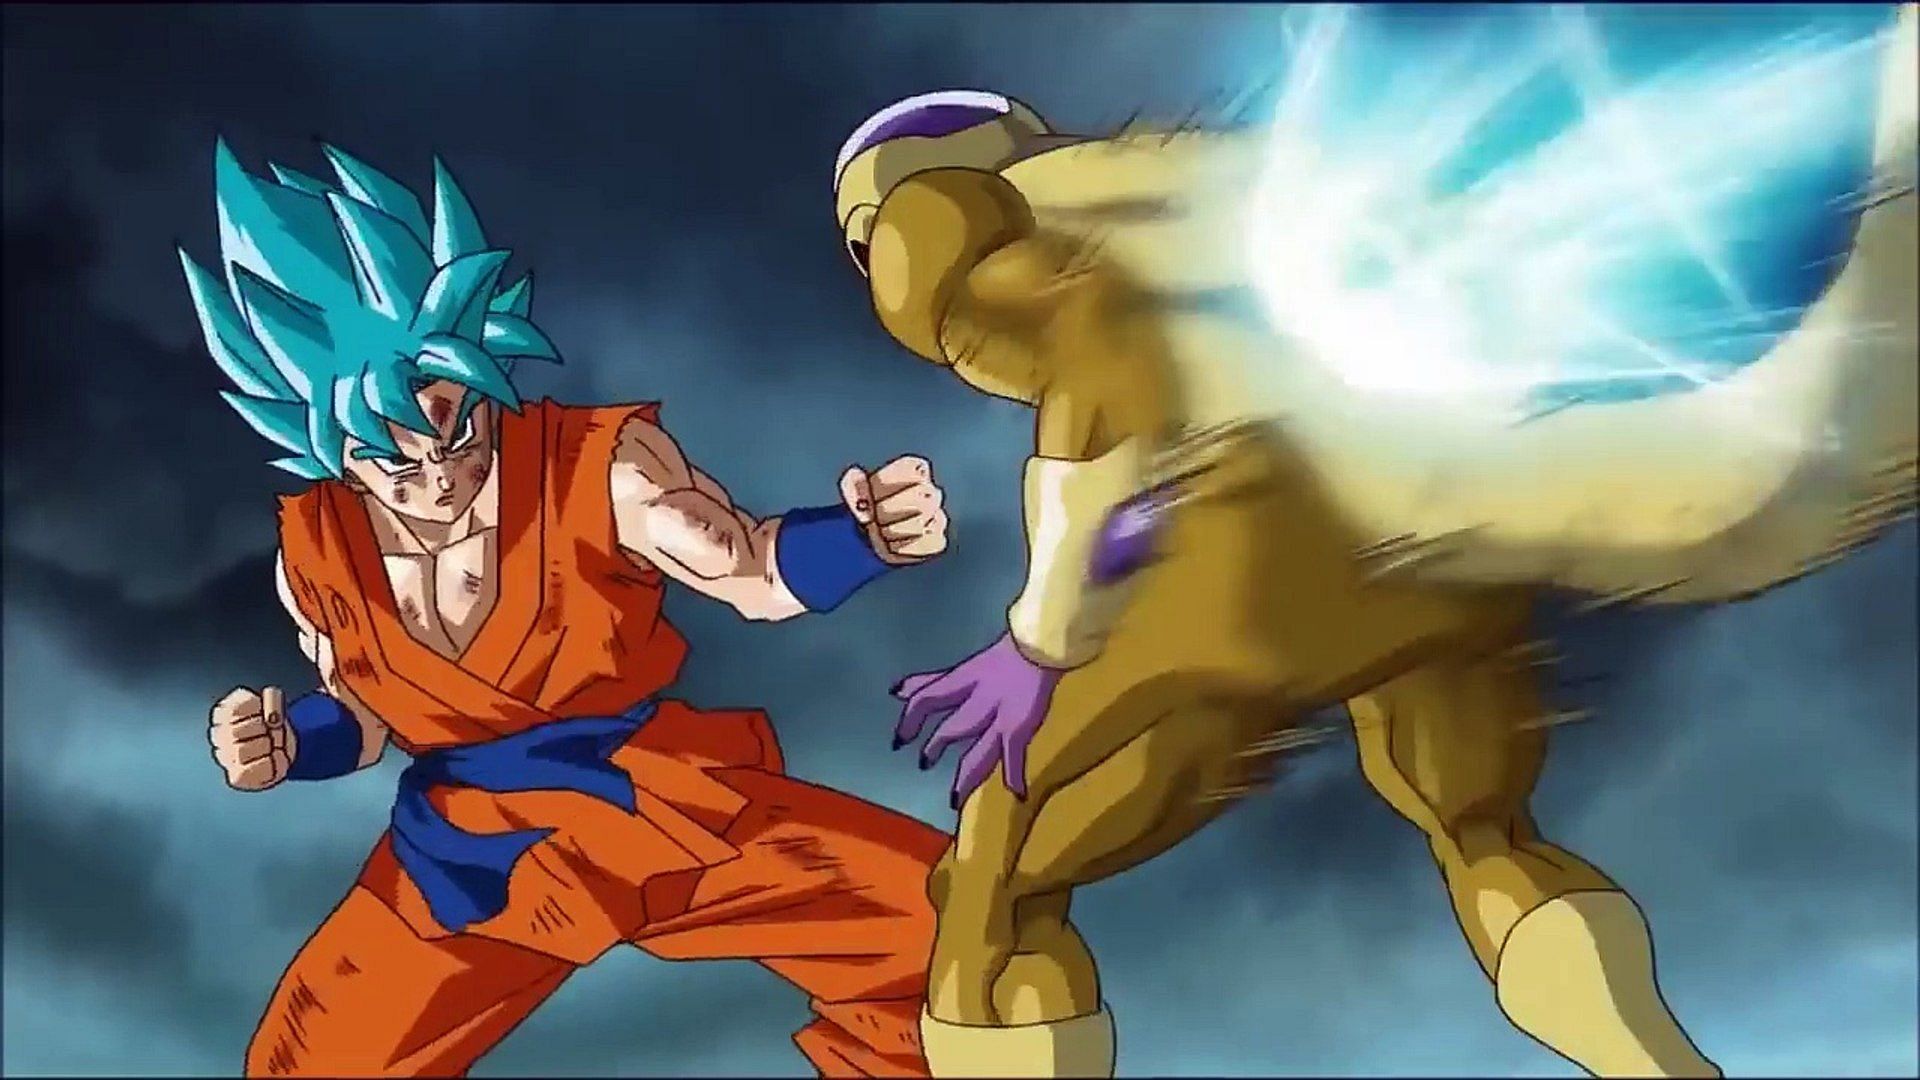 Dragon Ball Super: Broly Goku Super Saiyan Blue Transformation (English  Dub) on Make a GIF